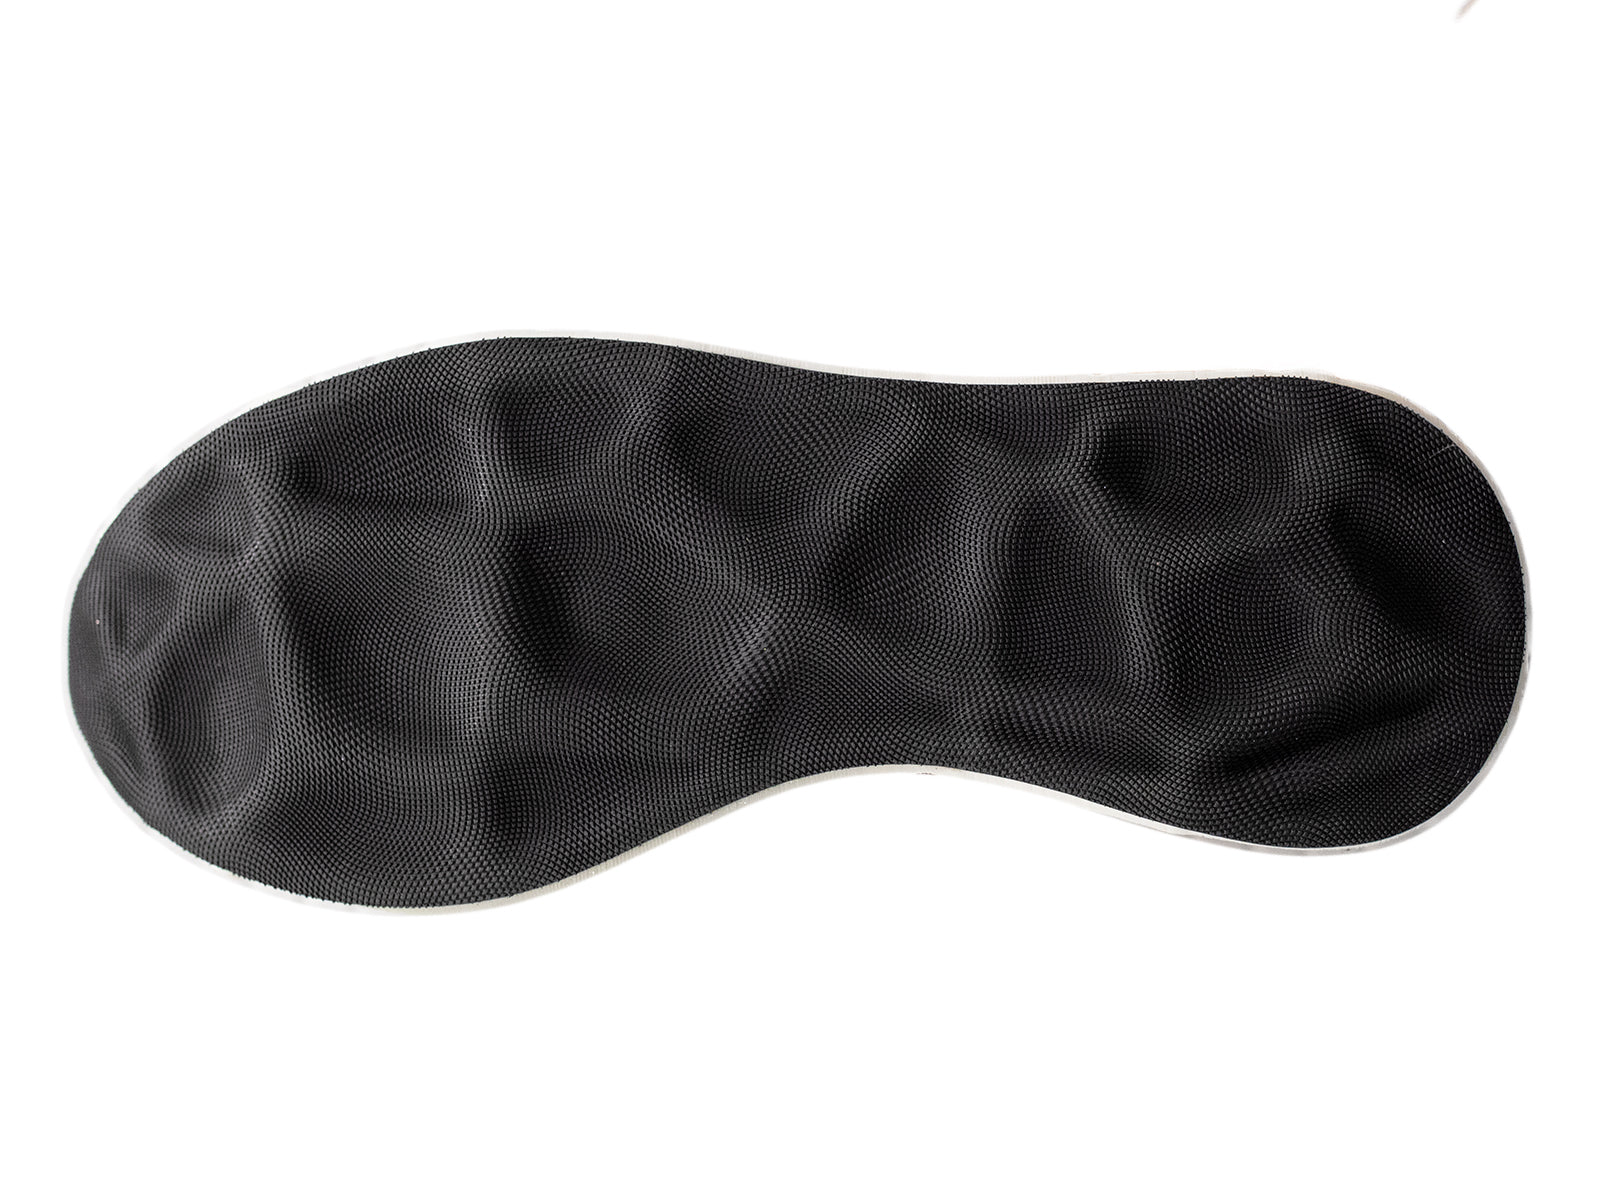 Zapatillas Lifestyle - Un-Classic - Blancas - Fick Company